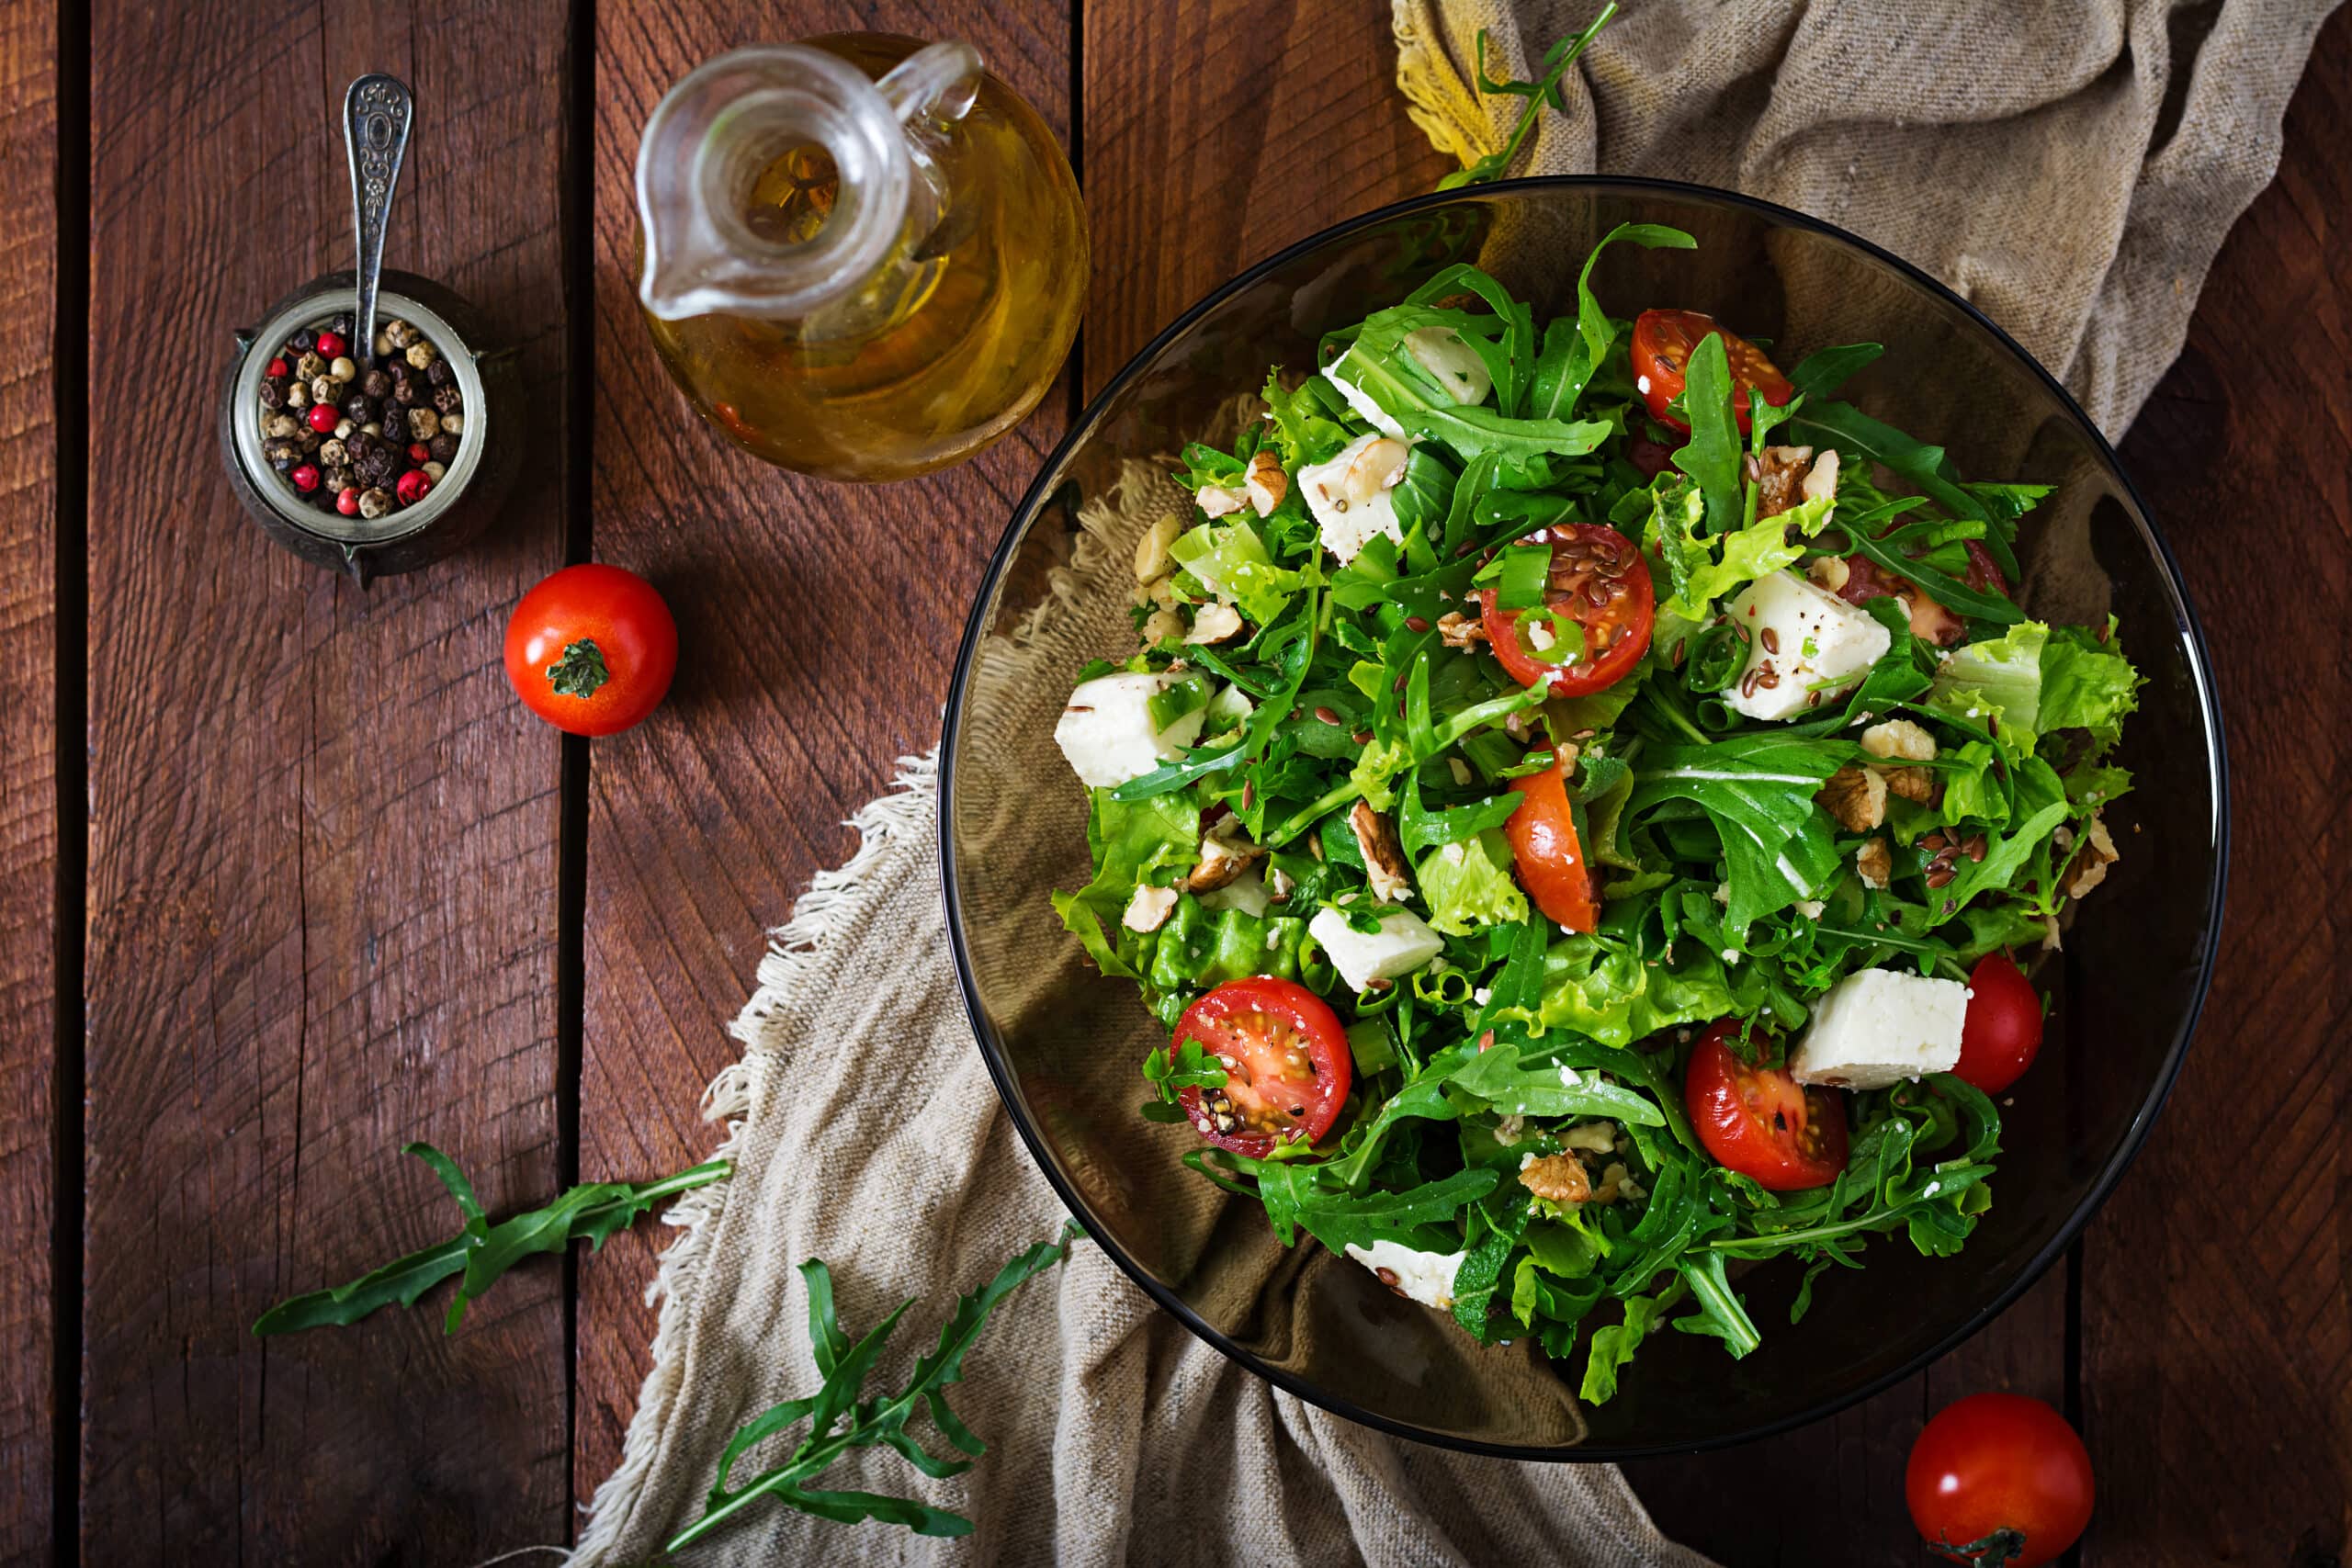 Salad of fresh vegetables, herbs, feta cheese and nuts. Dietary menu. Proper nutrition.